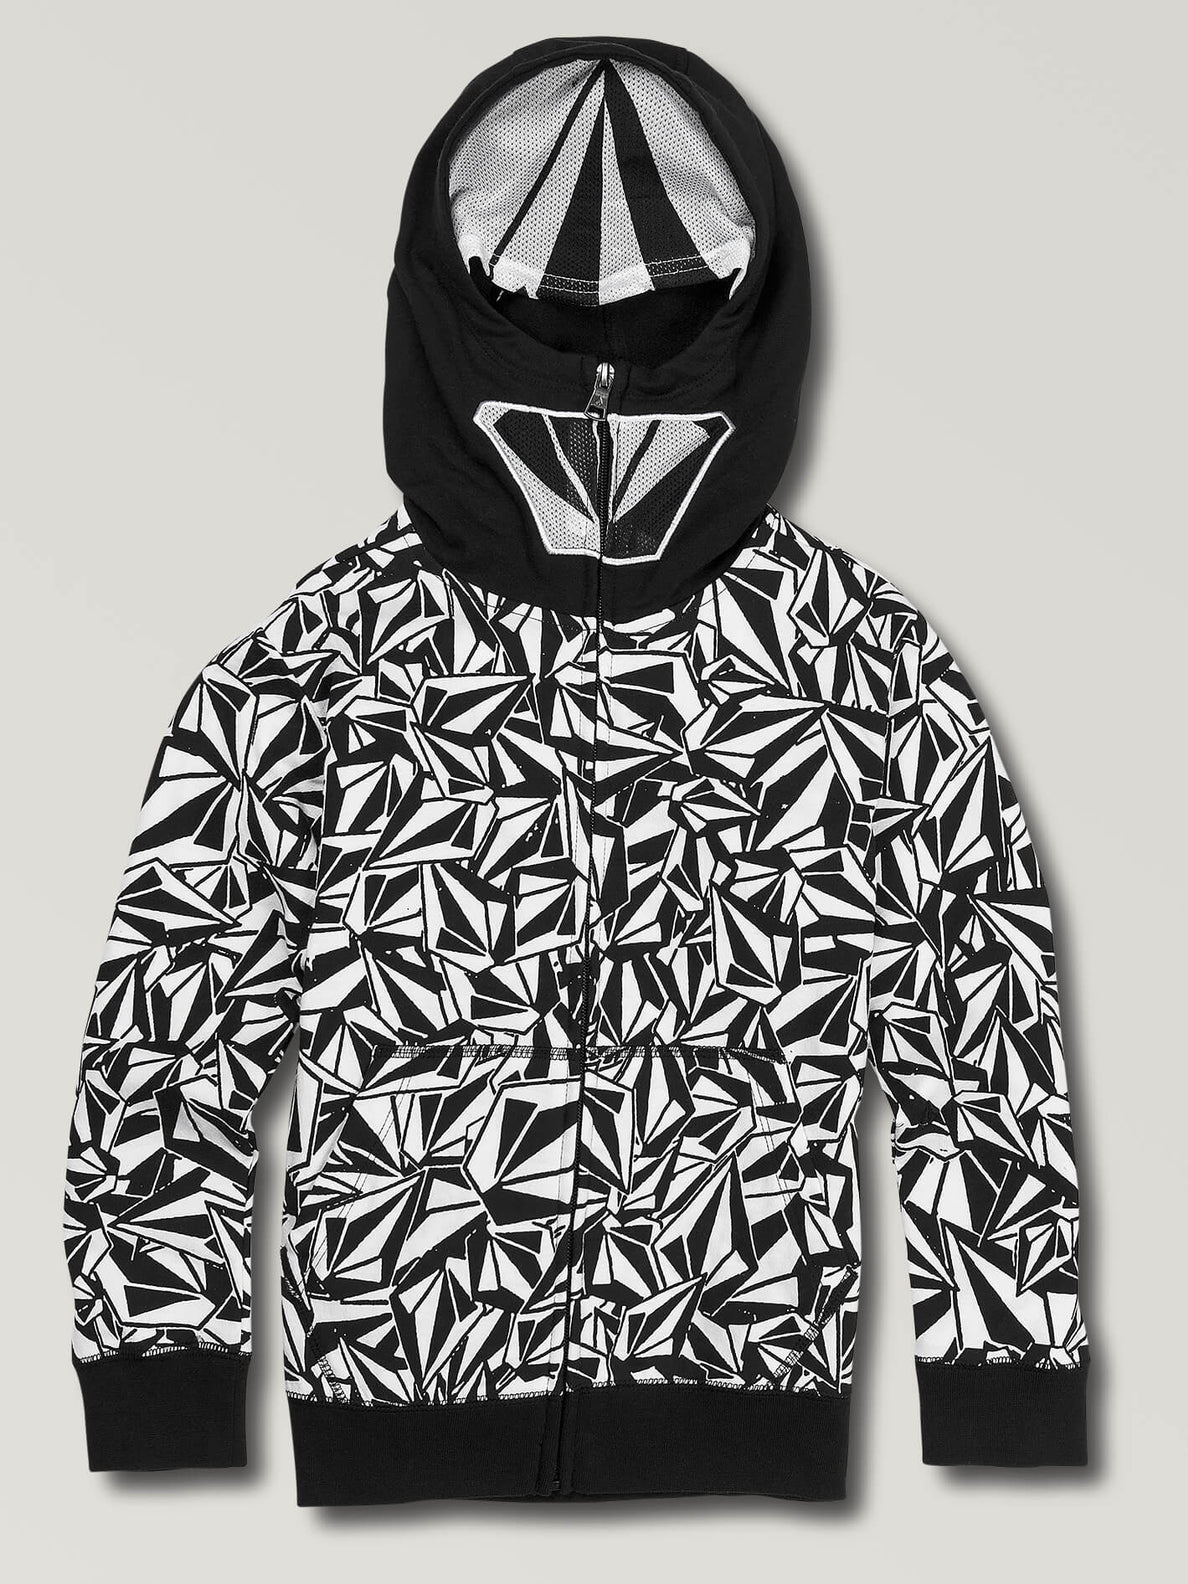 volcom full zip hoodies with faces